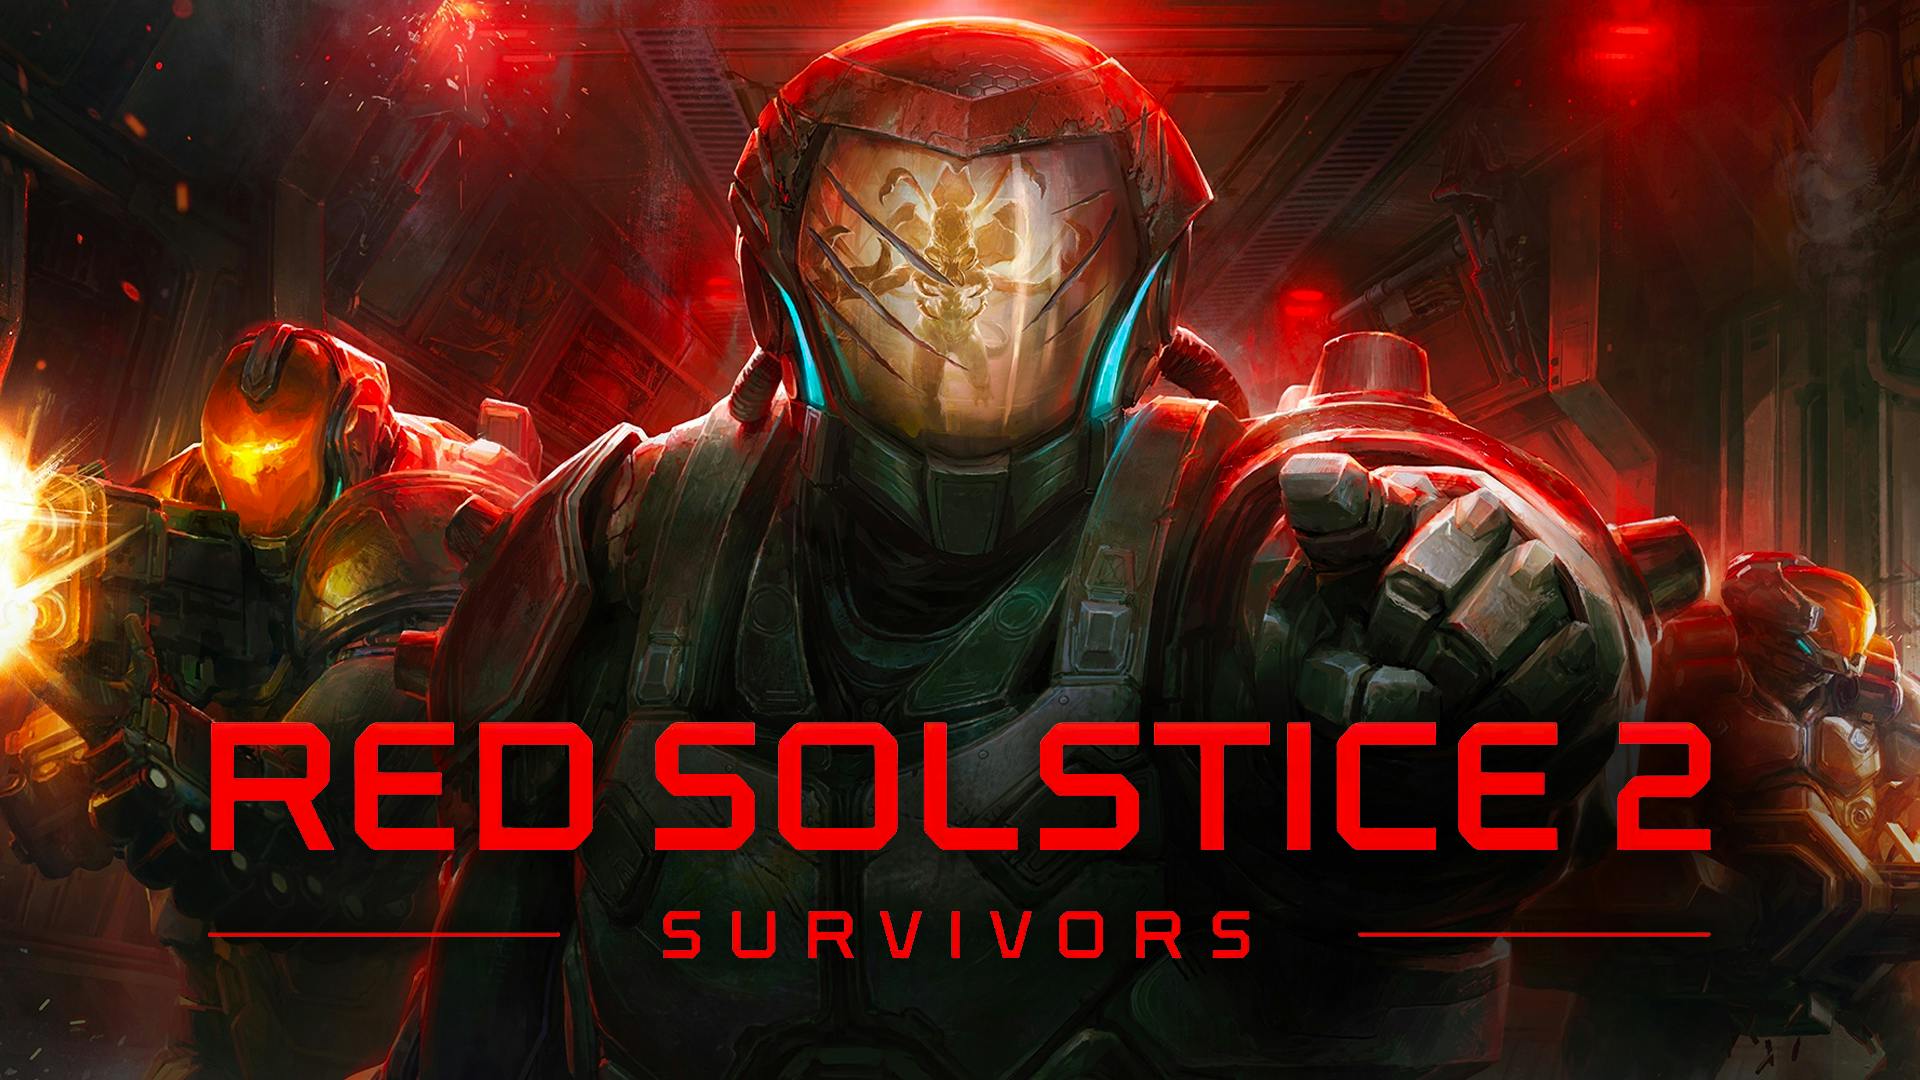 Red Solstice 2. Red Solstice 2 Survivors игрушка. Red Solstice Condatis. Red Solstice 2: Survivors Guilds Адский огонь. 505 games игры